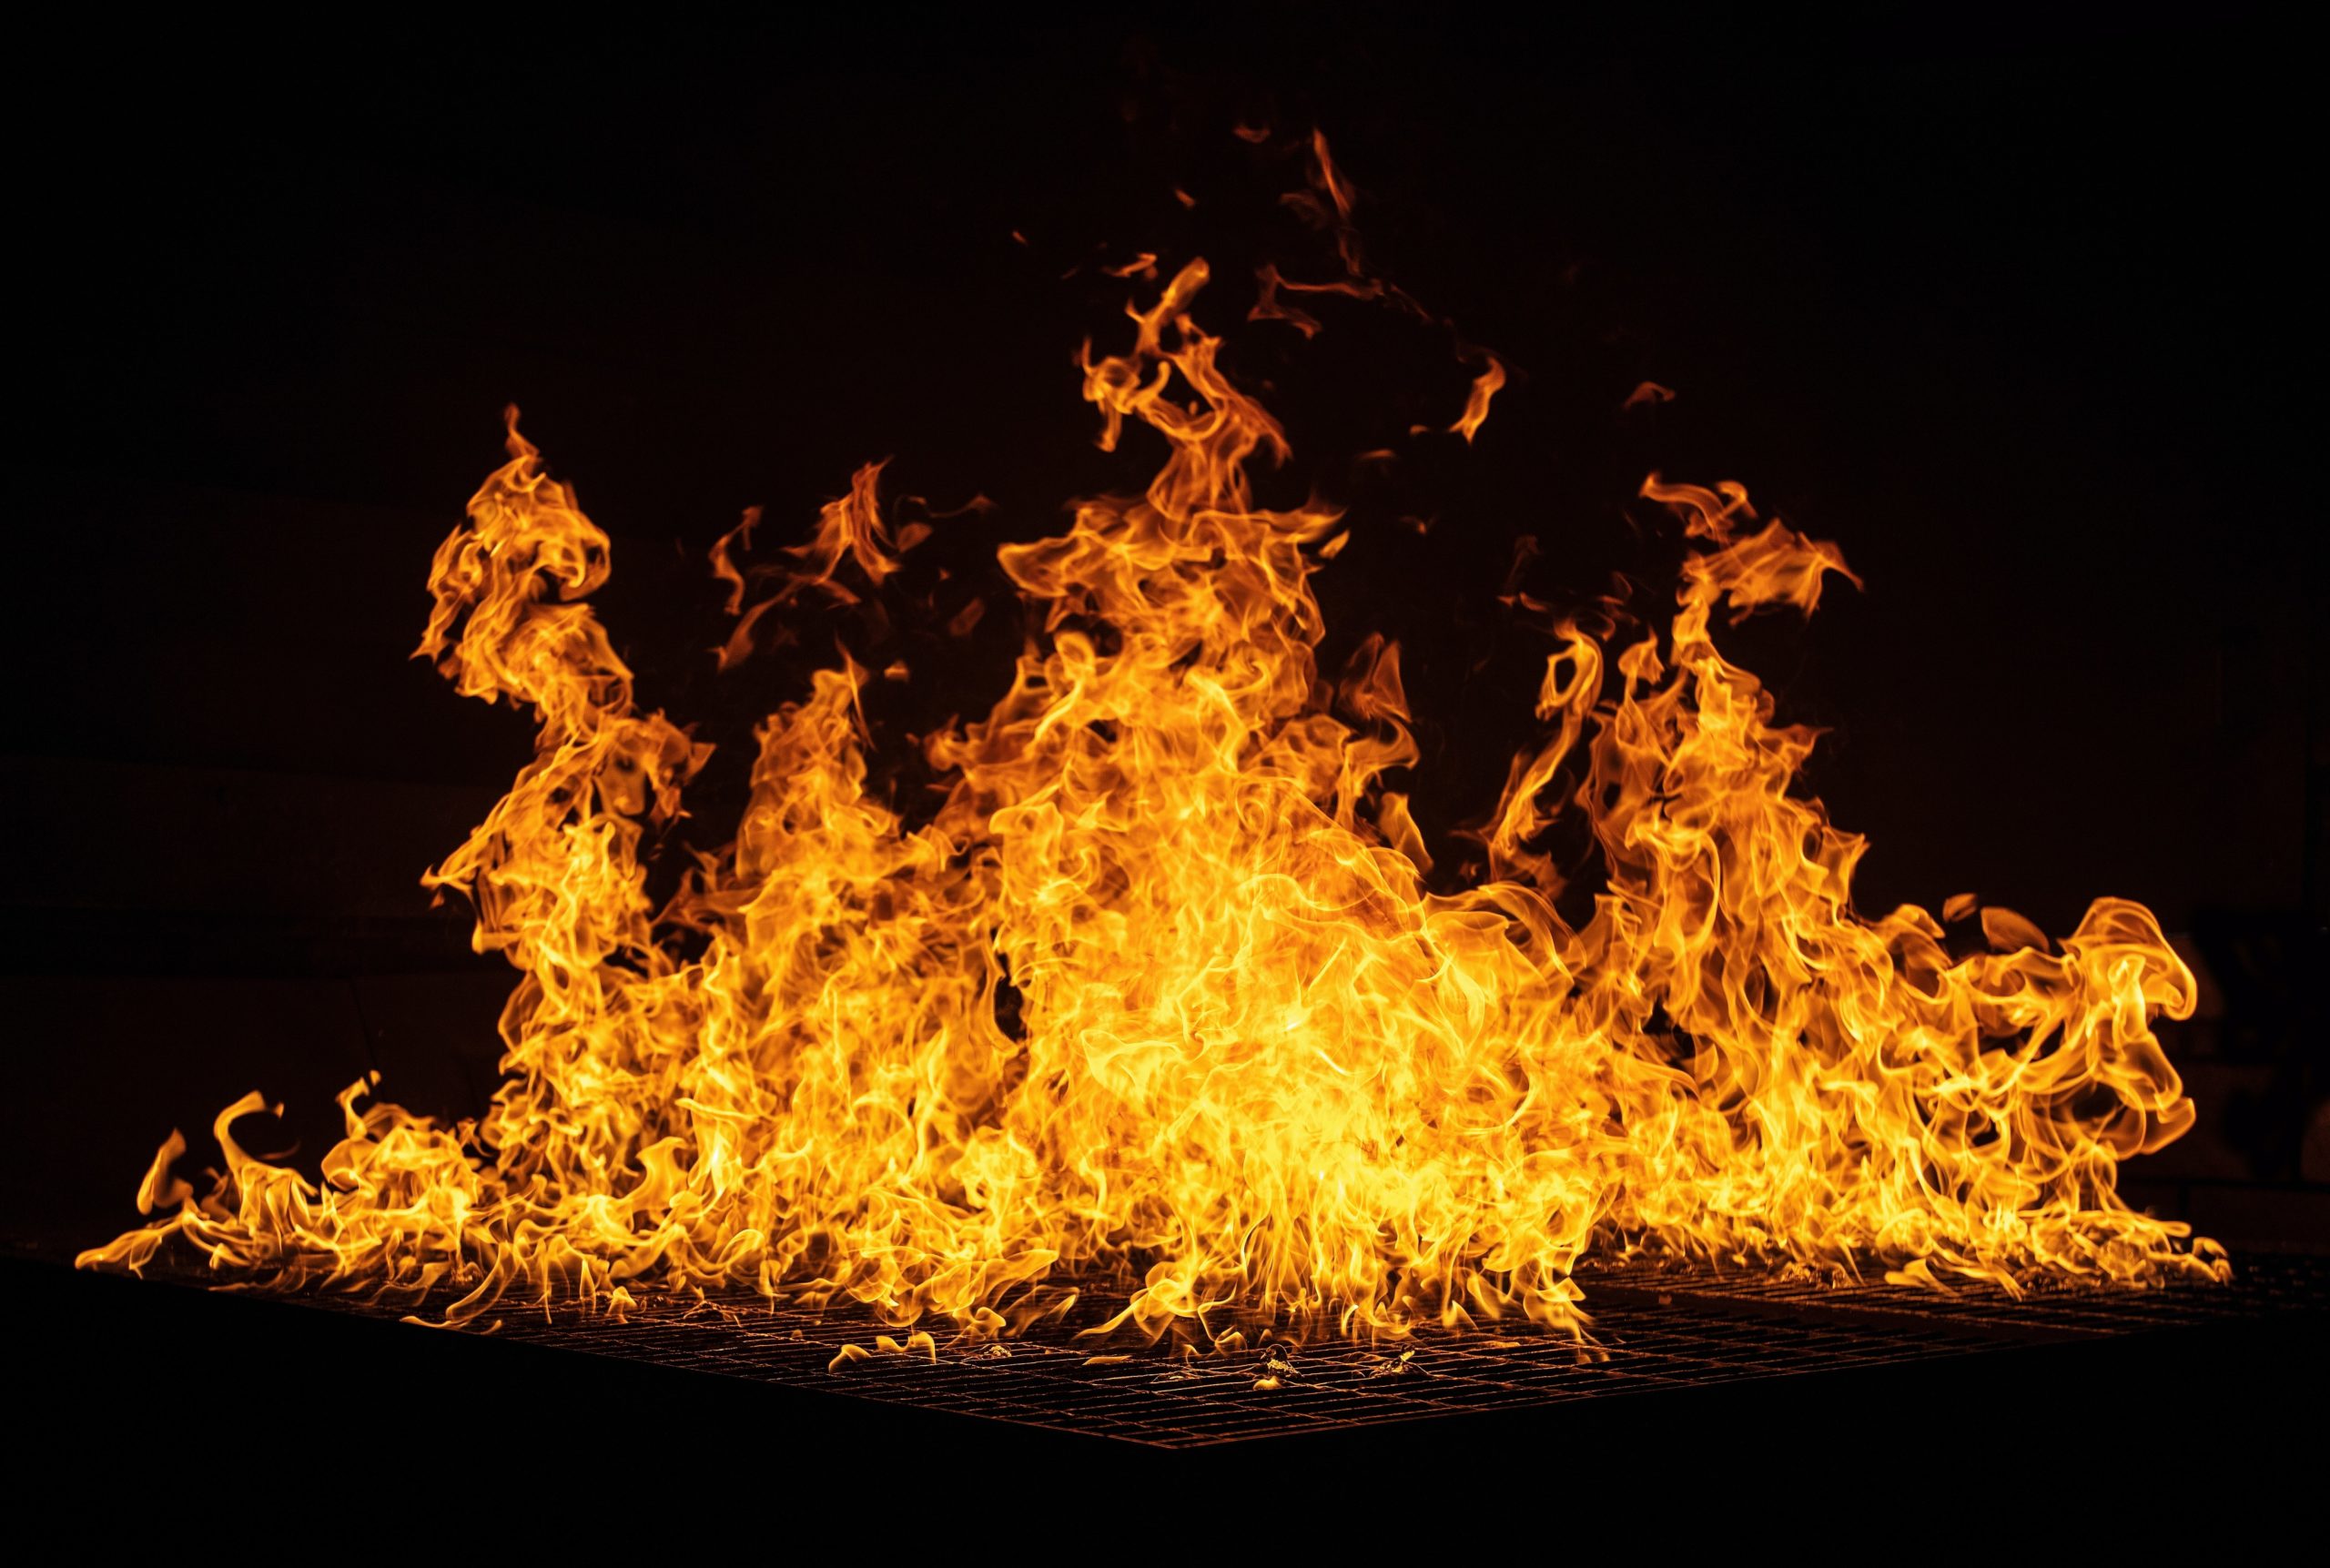 Fire 259 by Ricardo Gomez Angel via Unsplash